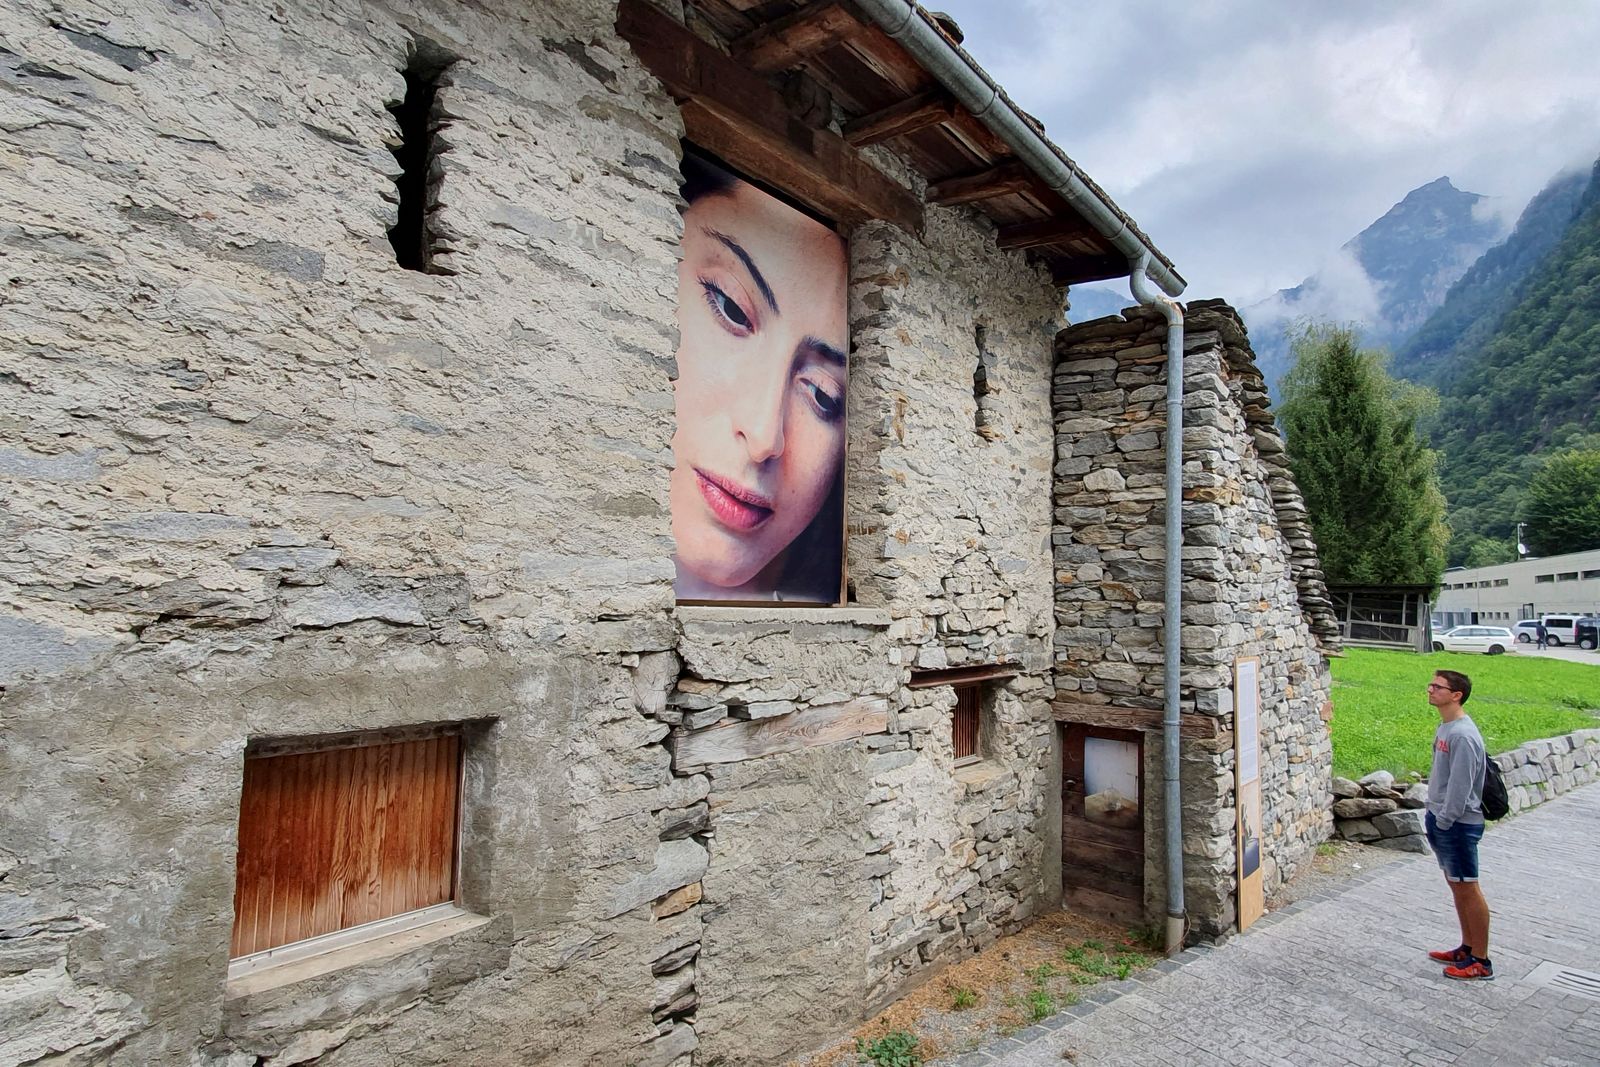 View of Ayline Olukman's solo exhibition during Verzasca FOTO 2019, Sonogno, Switzerland.